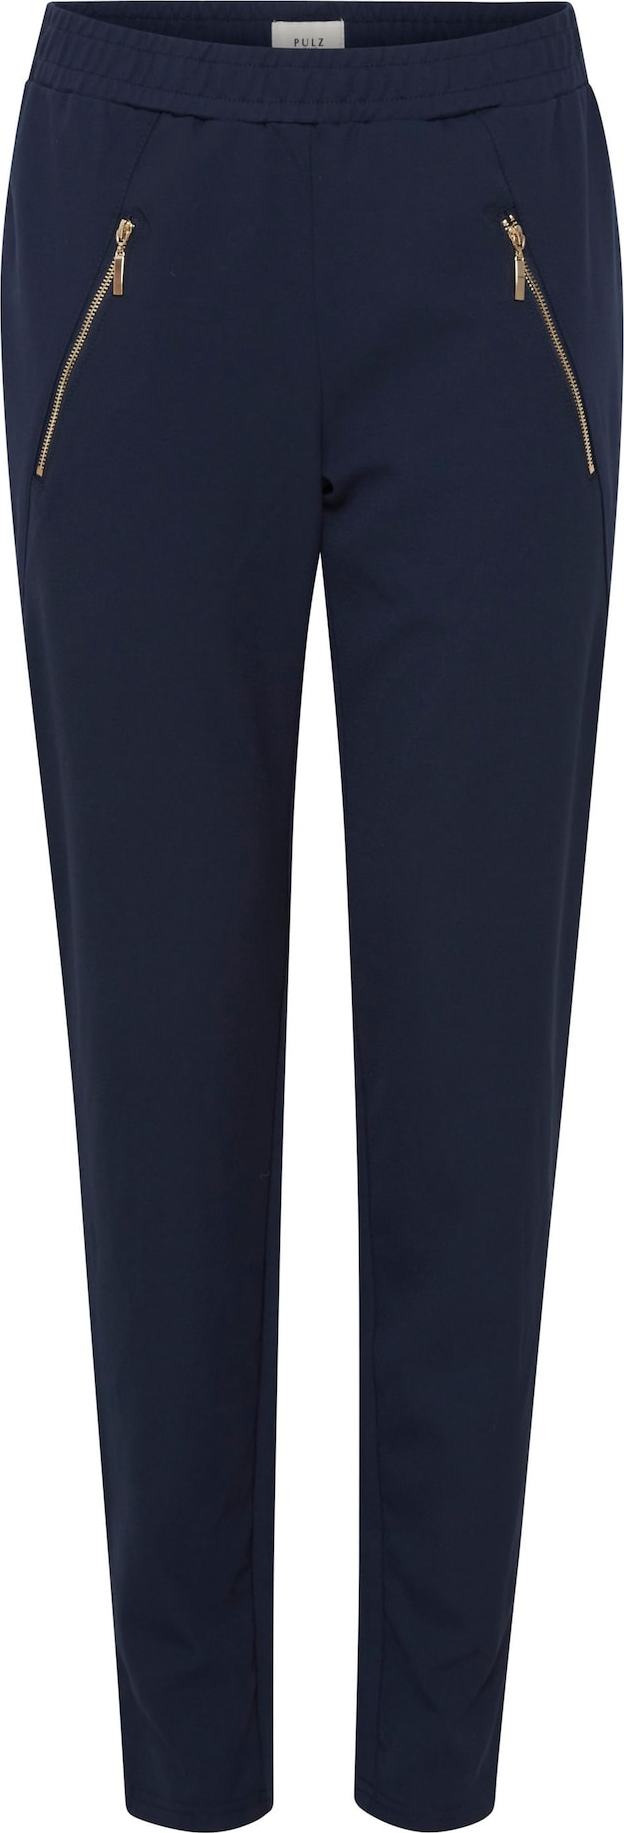 Kalhoty 'Kira' PULZ Jeans marine modrá